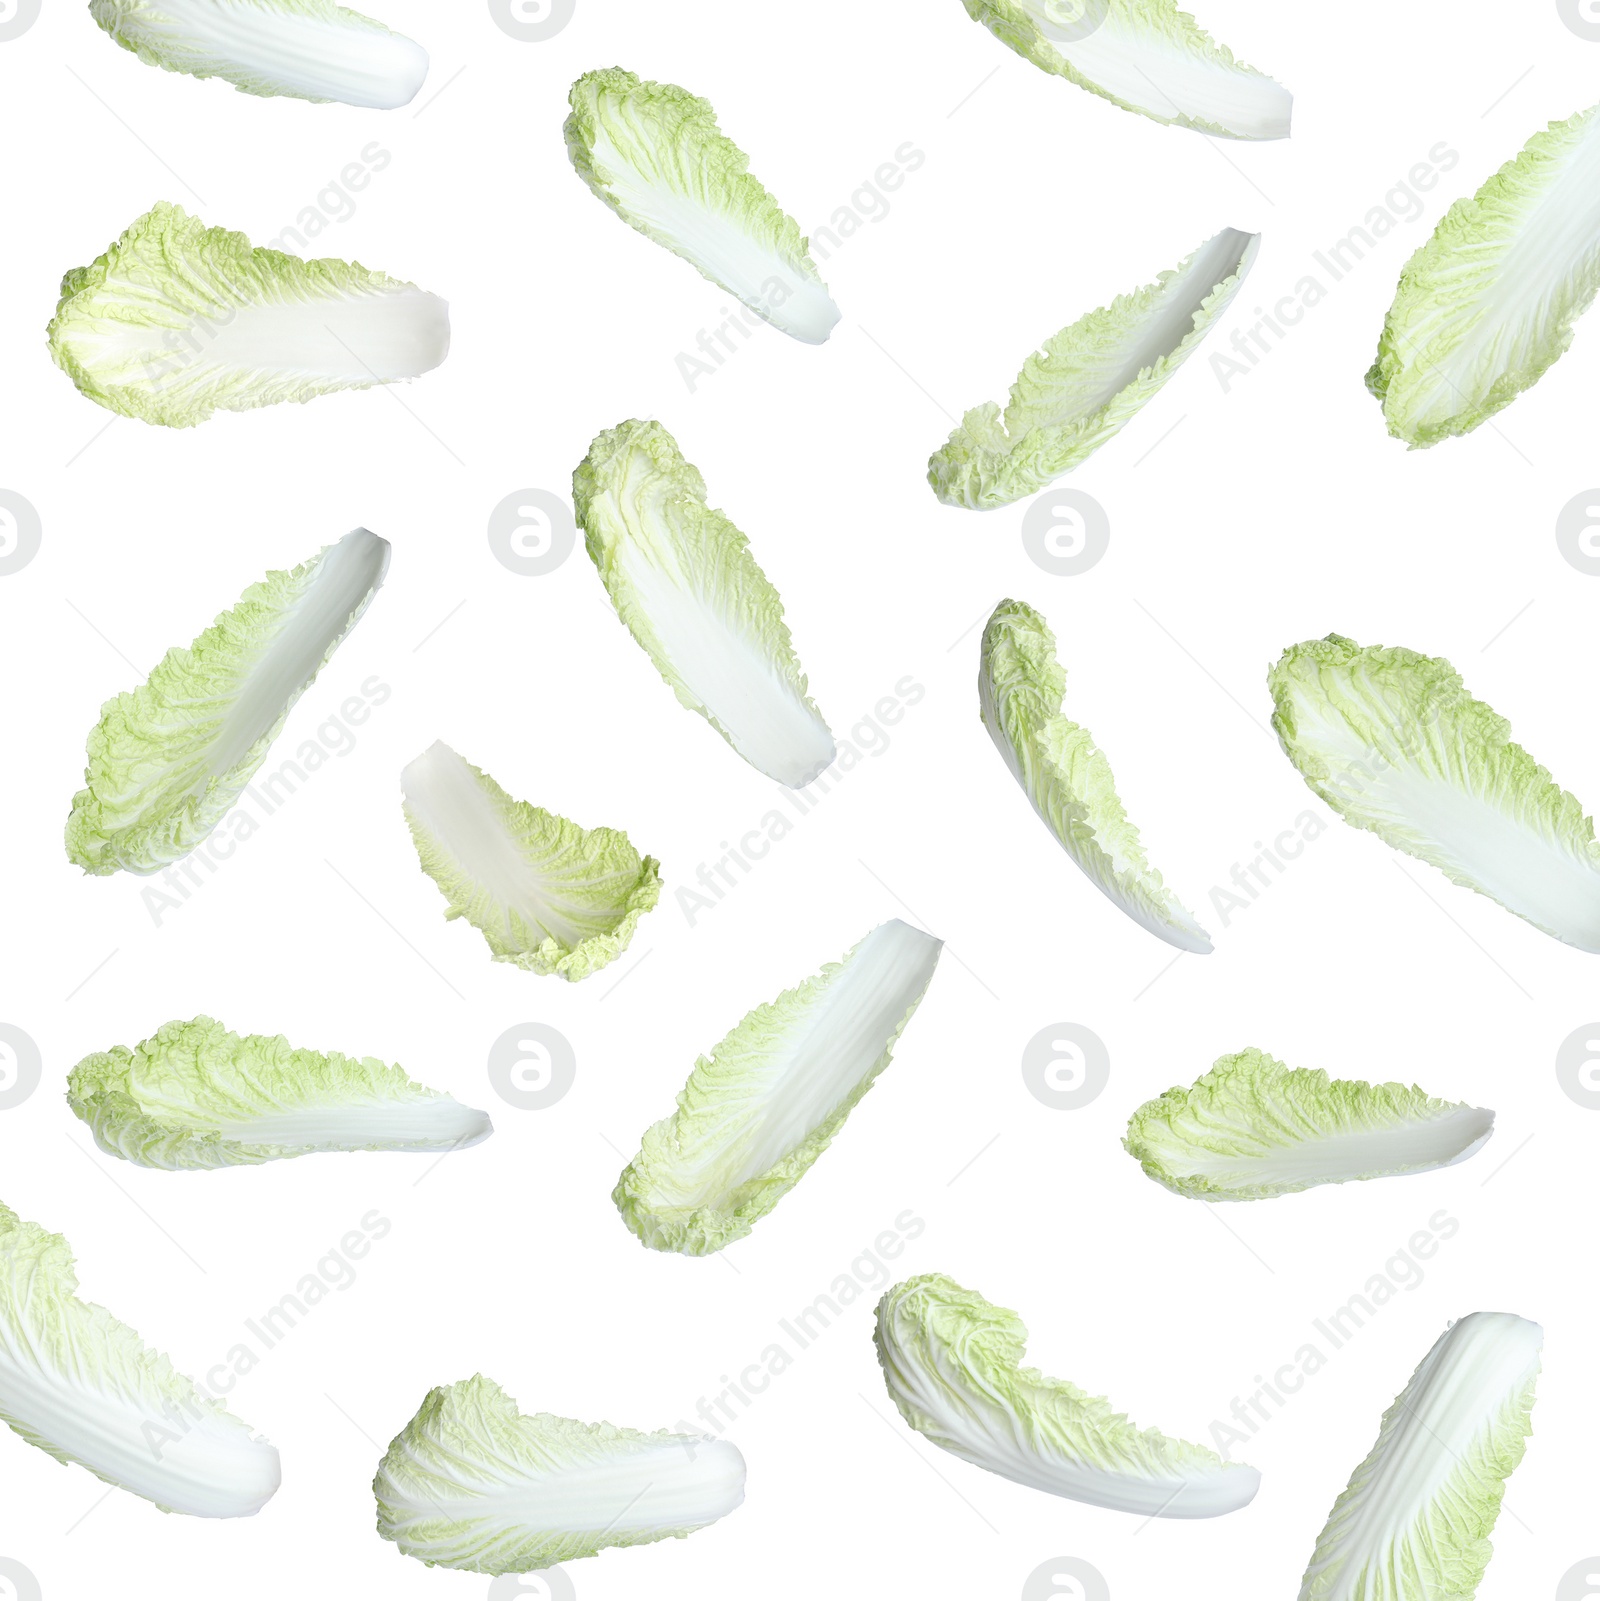 Image of Set with falling fresh leaves of napa cabbage on white background